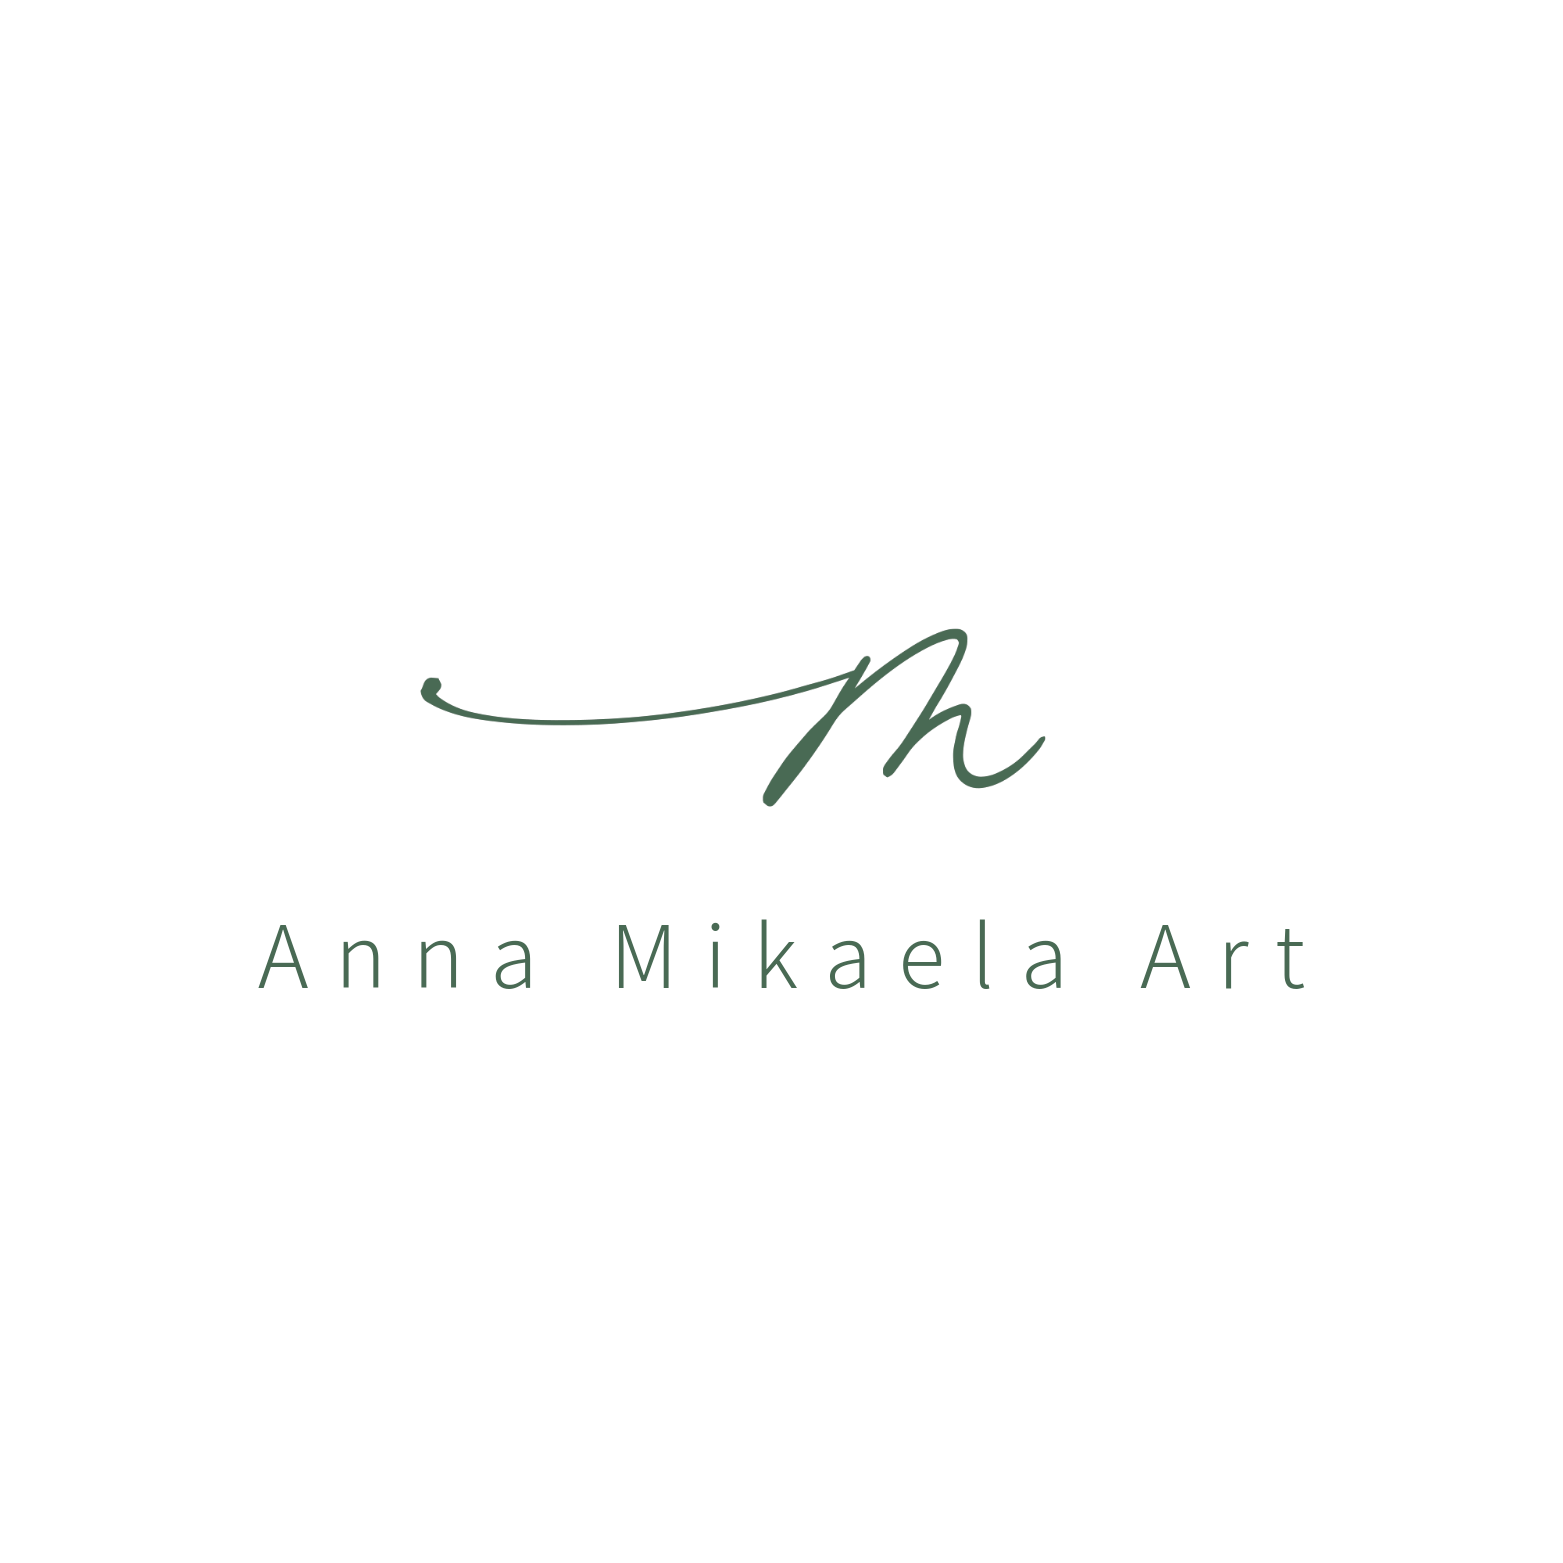 Anna Mikaela Art